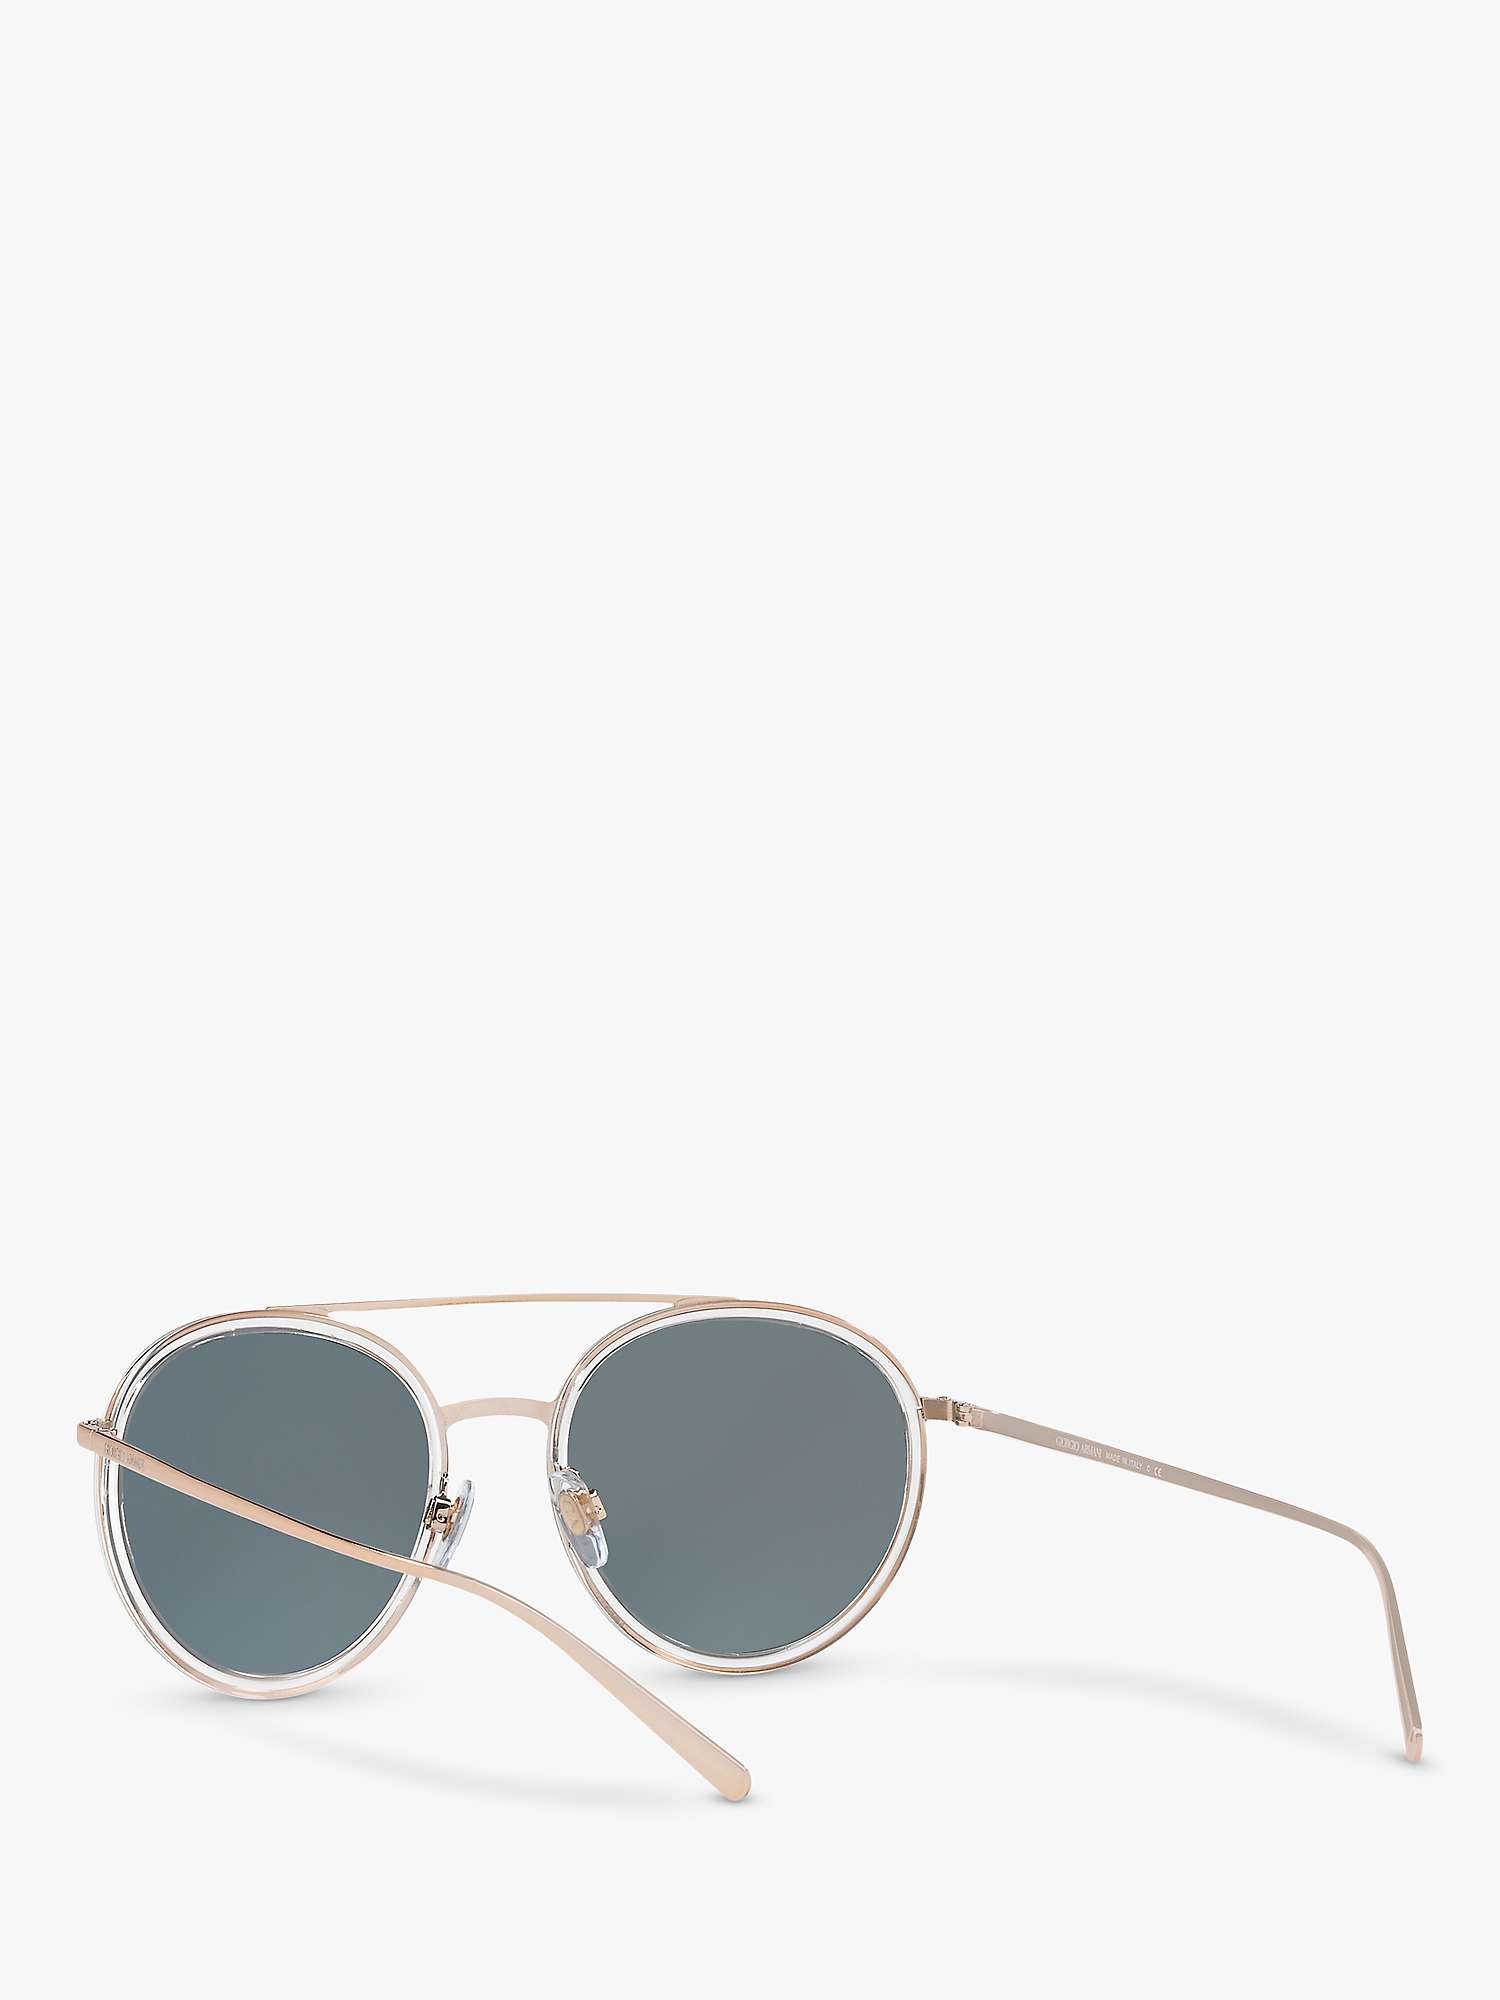 Buy Giorgio Armani AR6051 Women's Round Sunglasses, Bronze/Mirror Orange Online at johnlewis.com